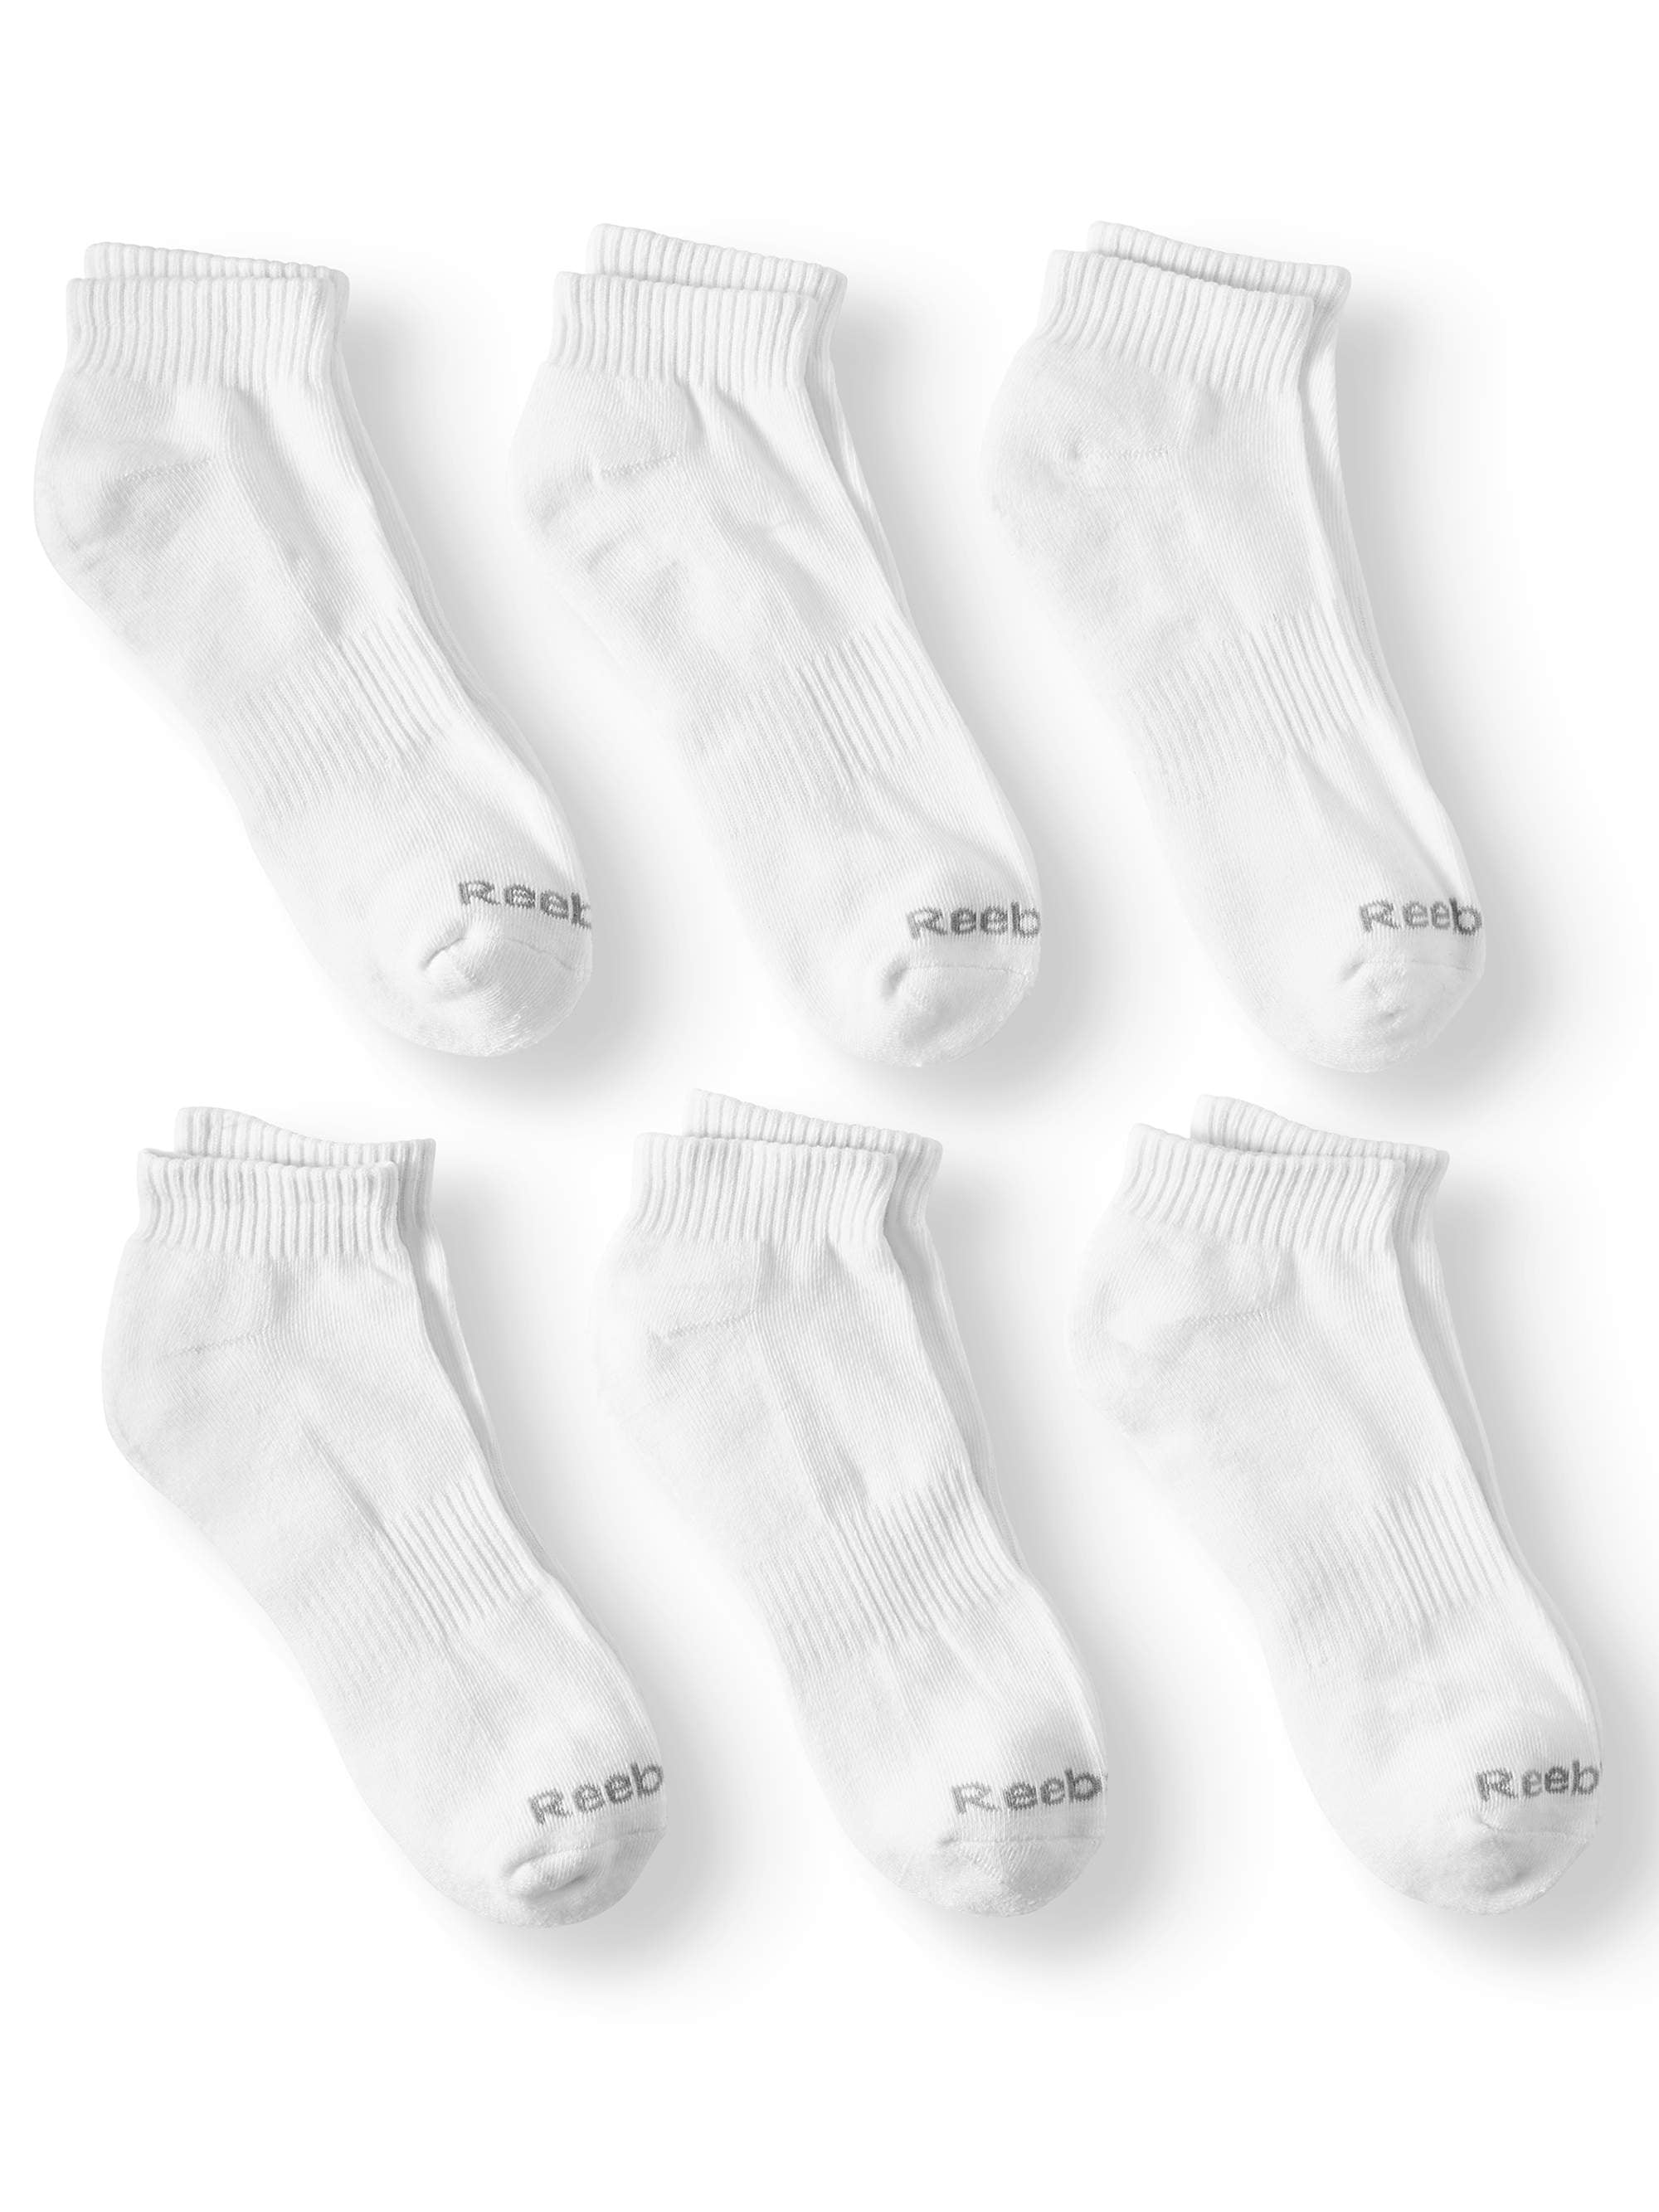 Men's Quarter Socks, 6 Pairs - Walmart.com